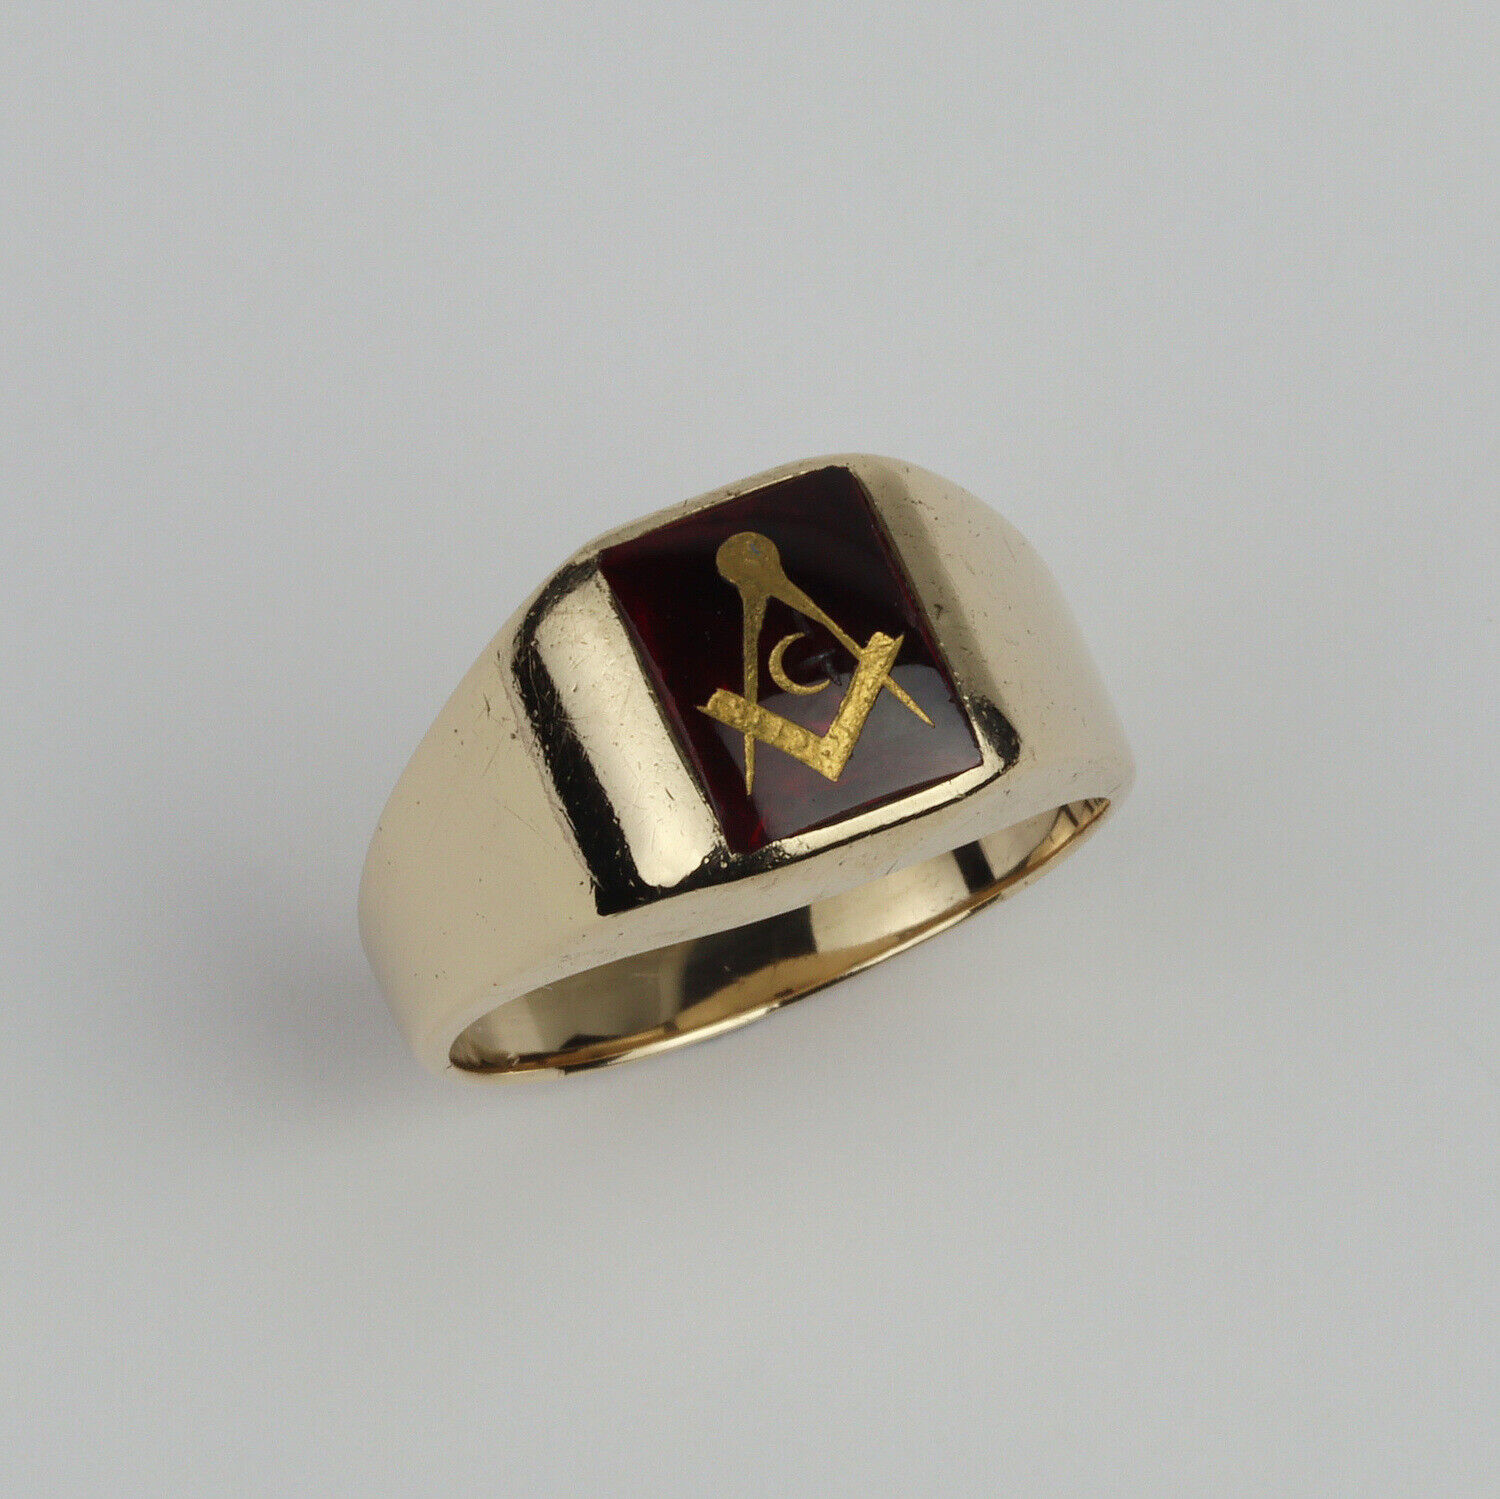 Vintage 10k Yellow Gold Men's Freemason Masonic Ring Size 9.75